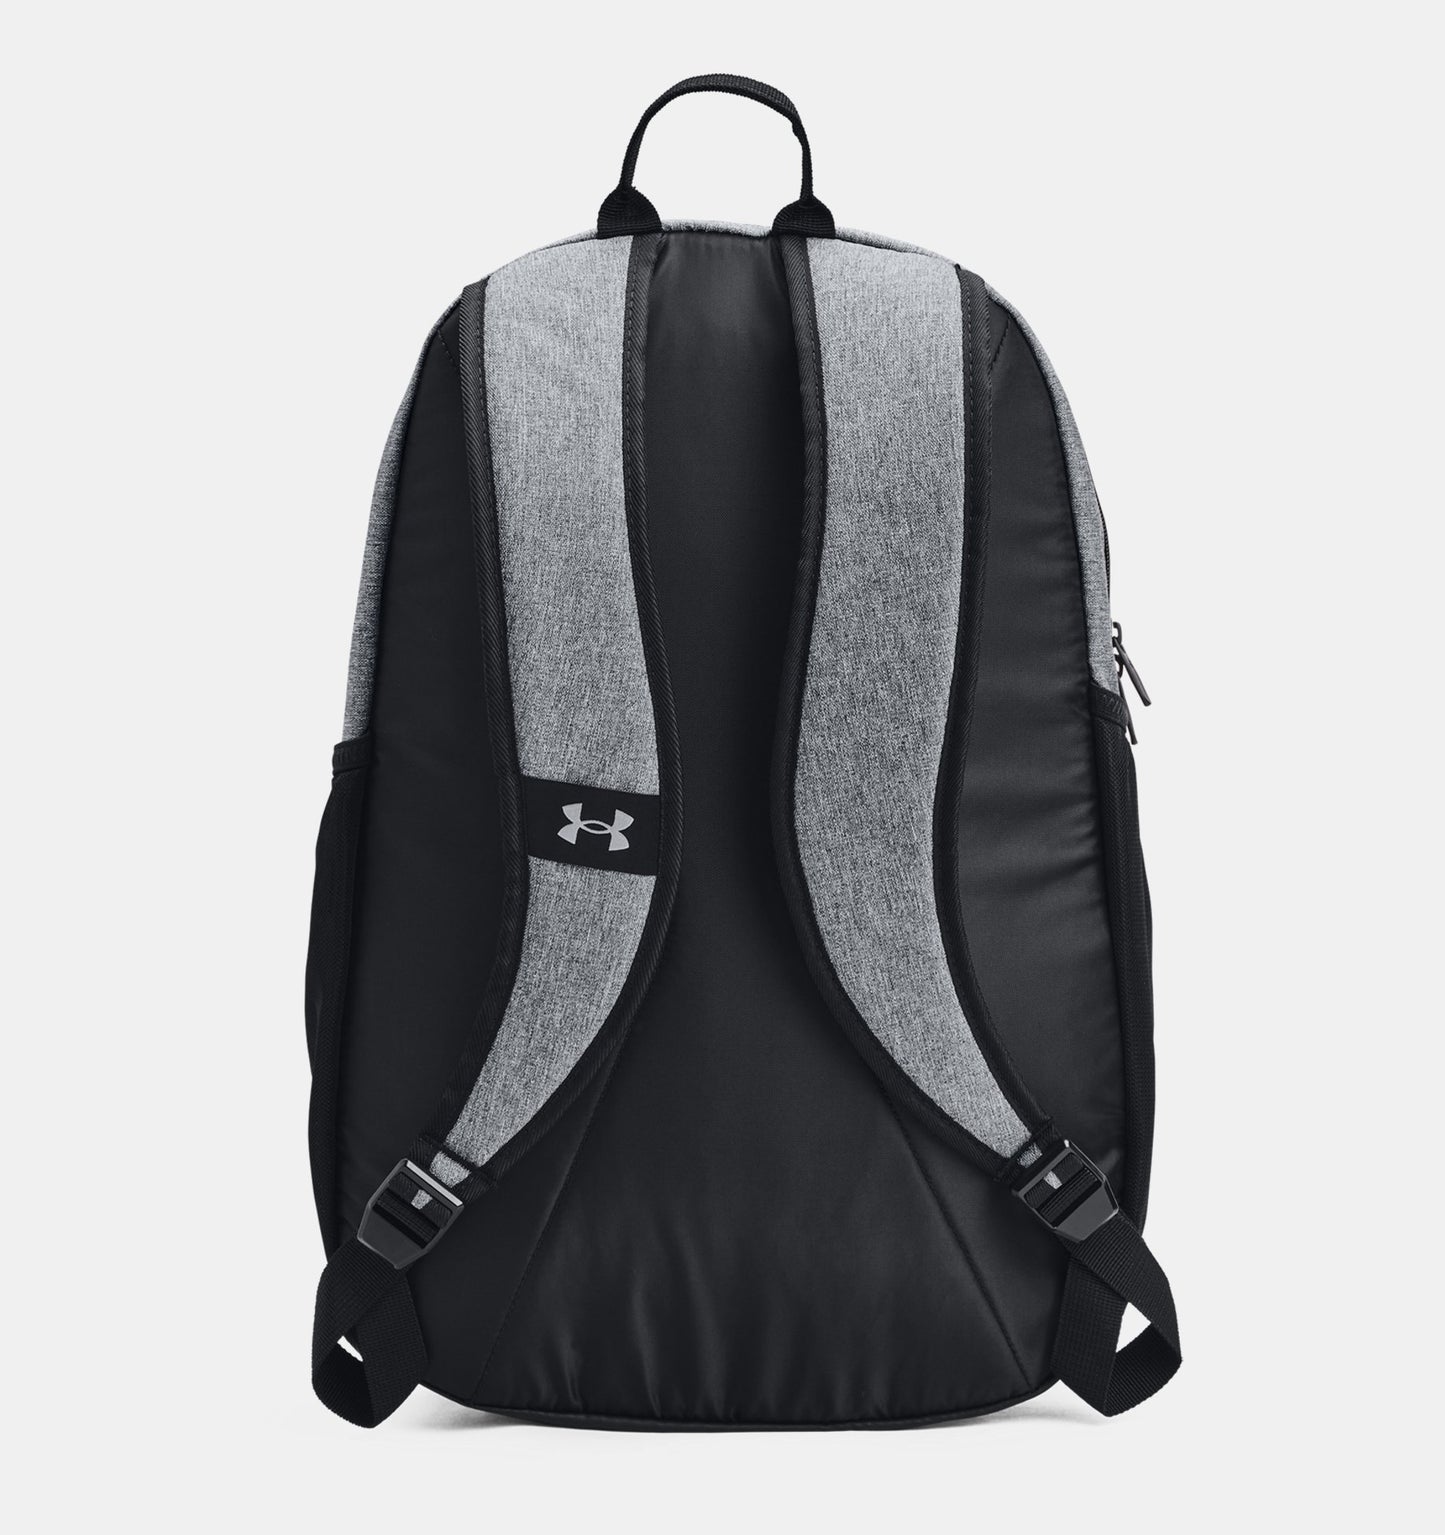 - Under Armour Hustle Sport Backpack Pitch Grey / Medium Heather / Black - (1364181 012) - F